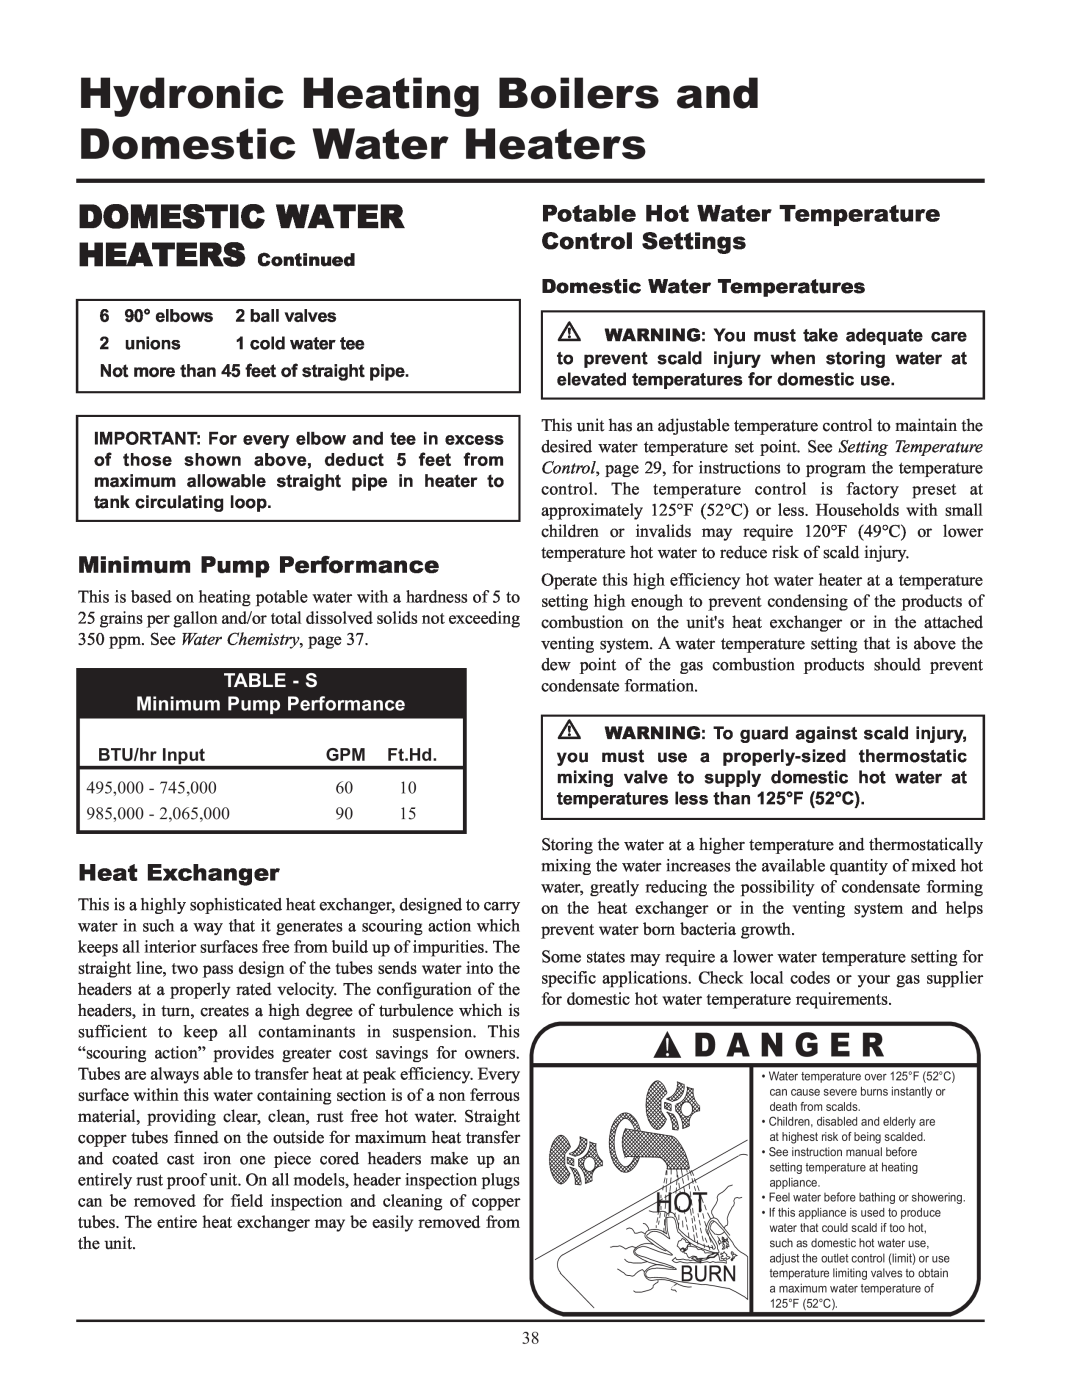 Lochinvar 000 - 2 Domestic Water, Minimum Pump Performance, Heat Exchanger, Potable Hot Water Temperature Control Settings 